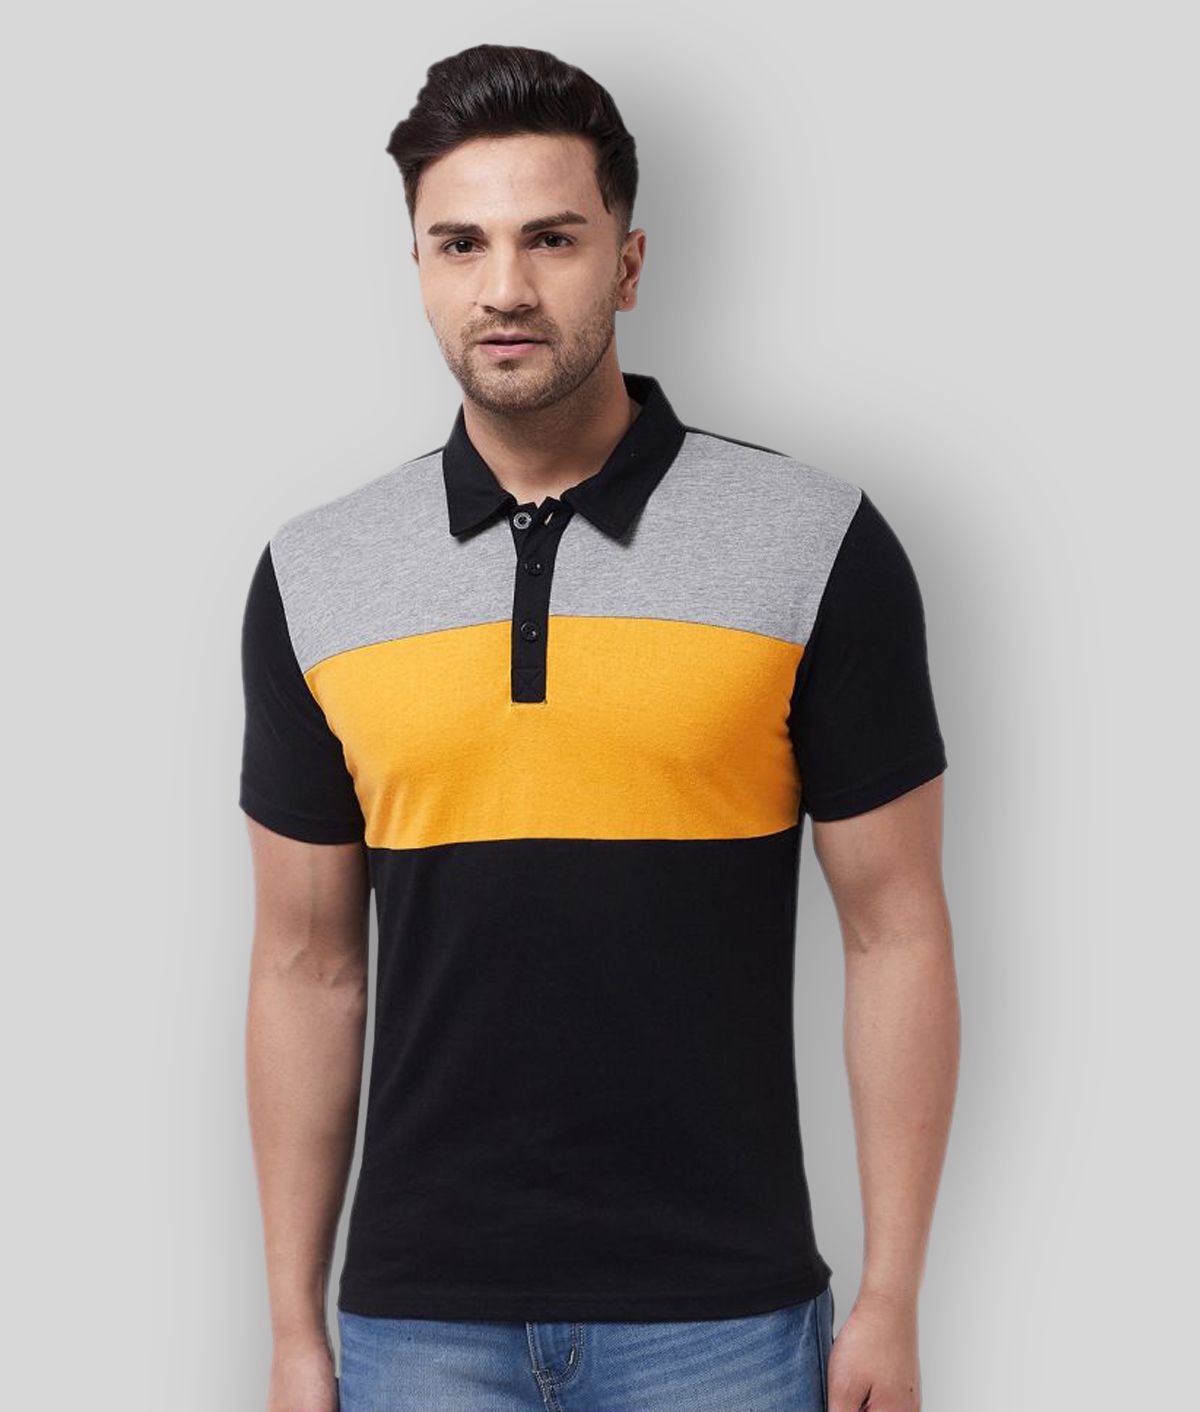 Gritstones - Black Cotton Blend Regular Fit Men's Polo T Shirt ( Pack of 1 )